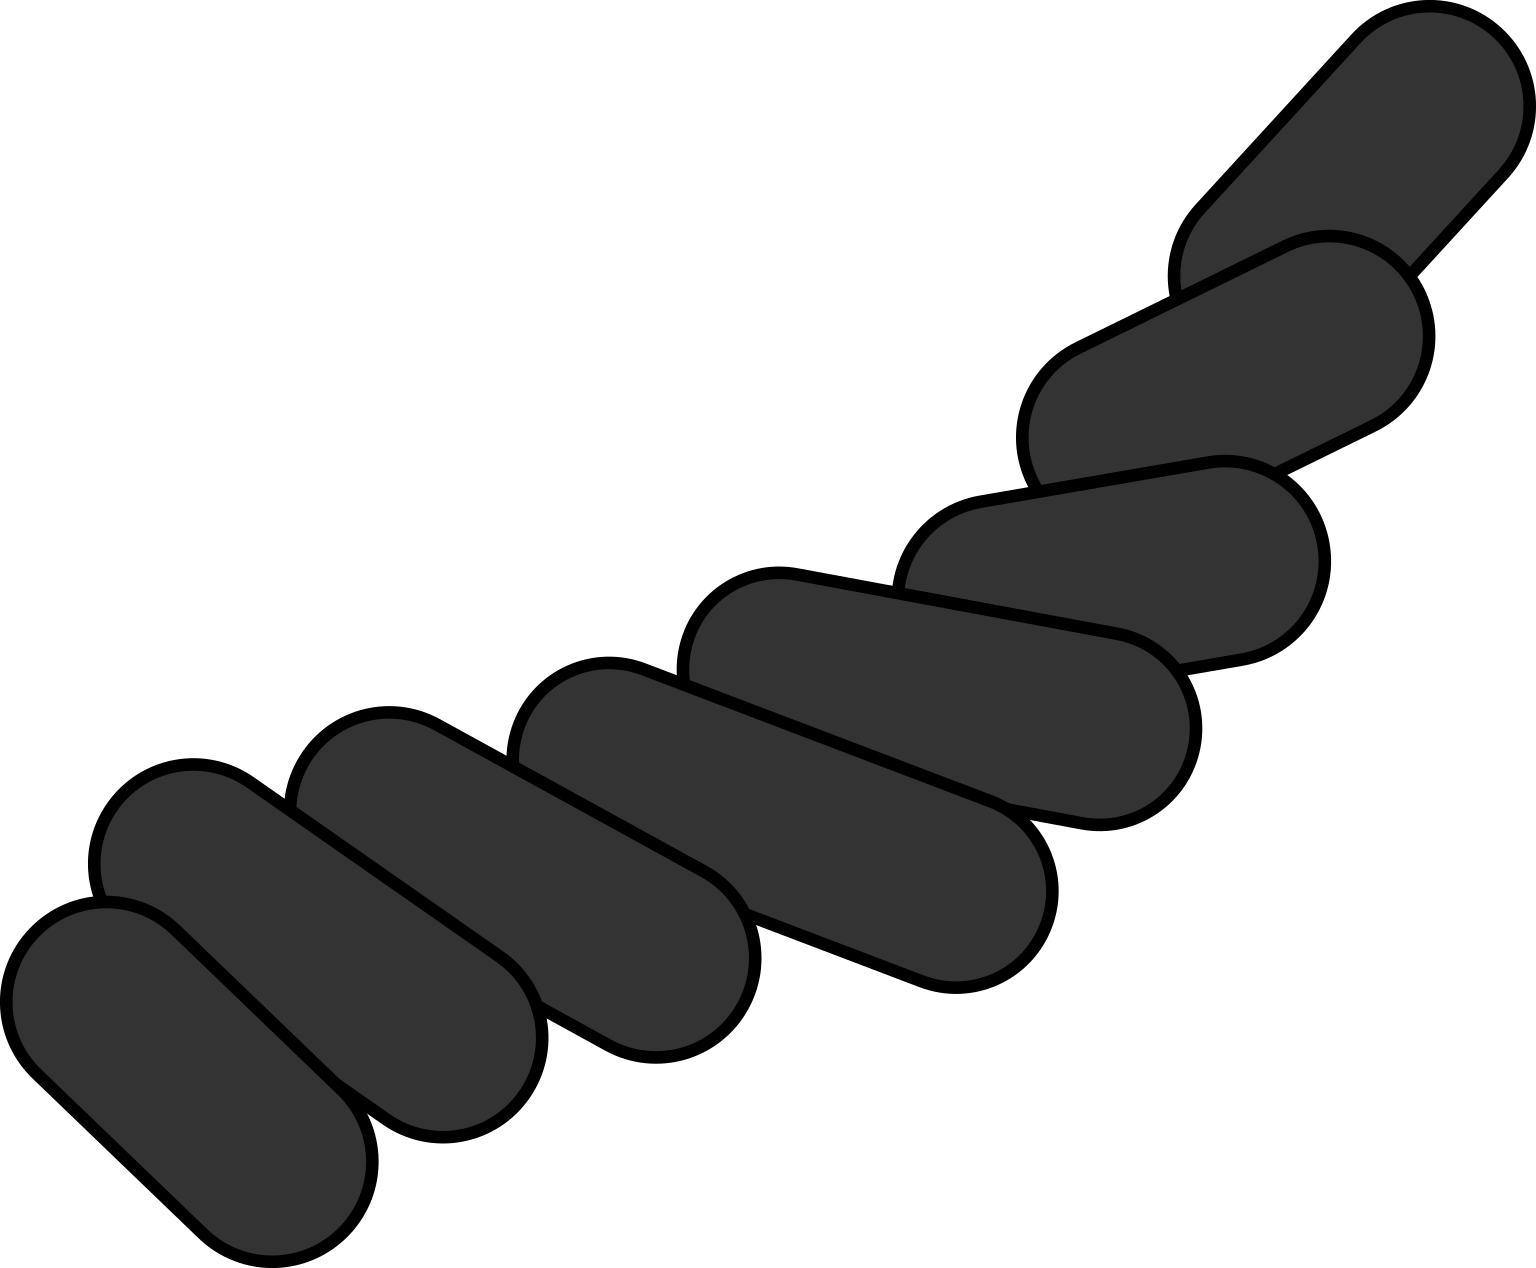 Gallionella ferruginea